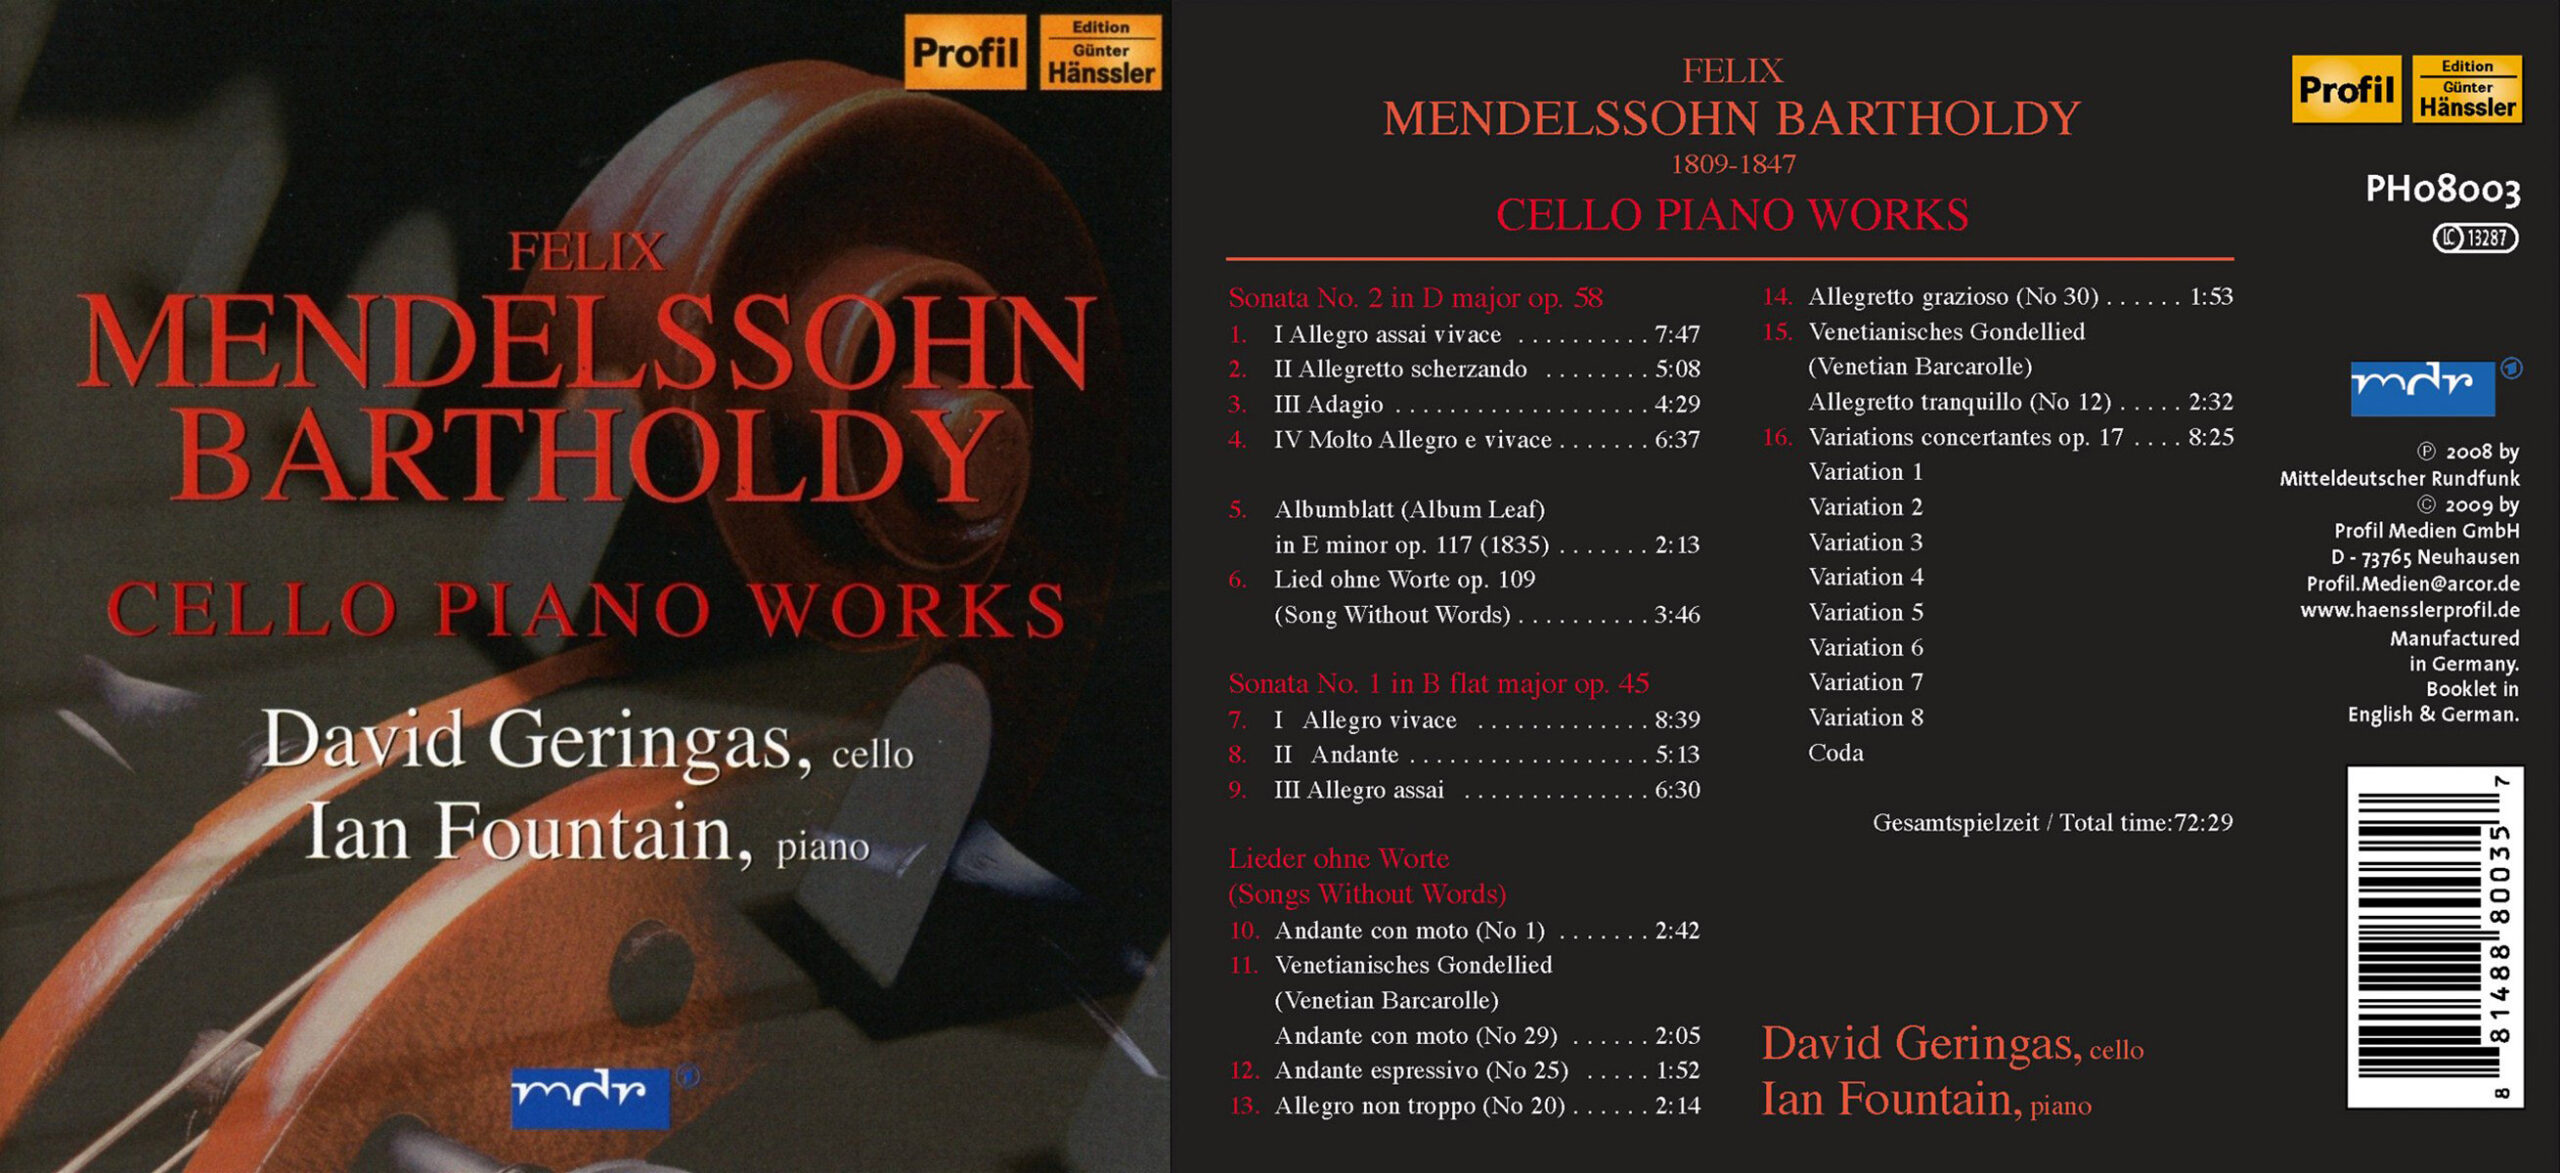 BBC Music Magazine | Mendelssohn – Cello Piano Works